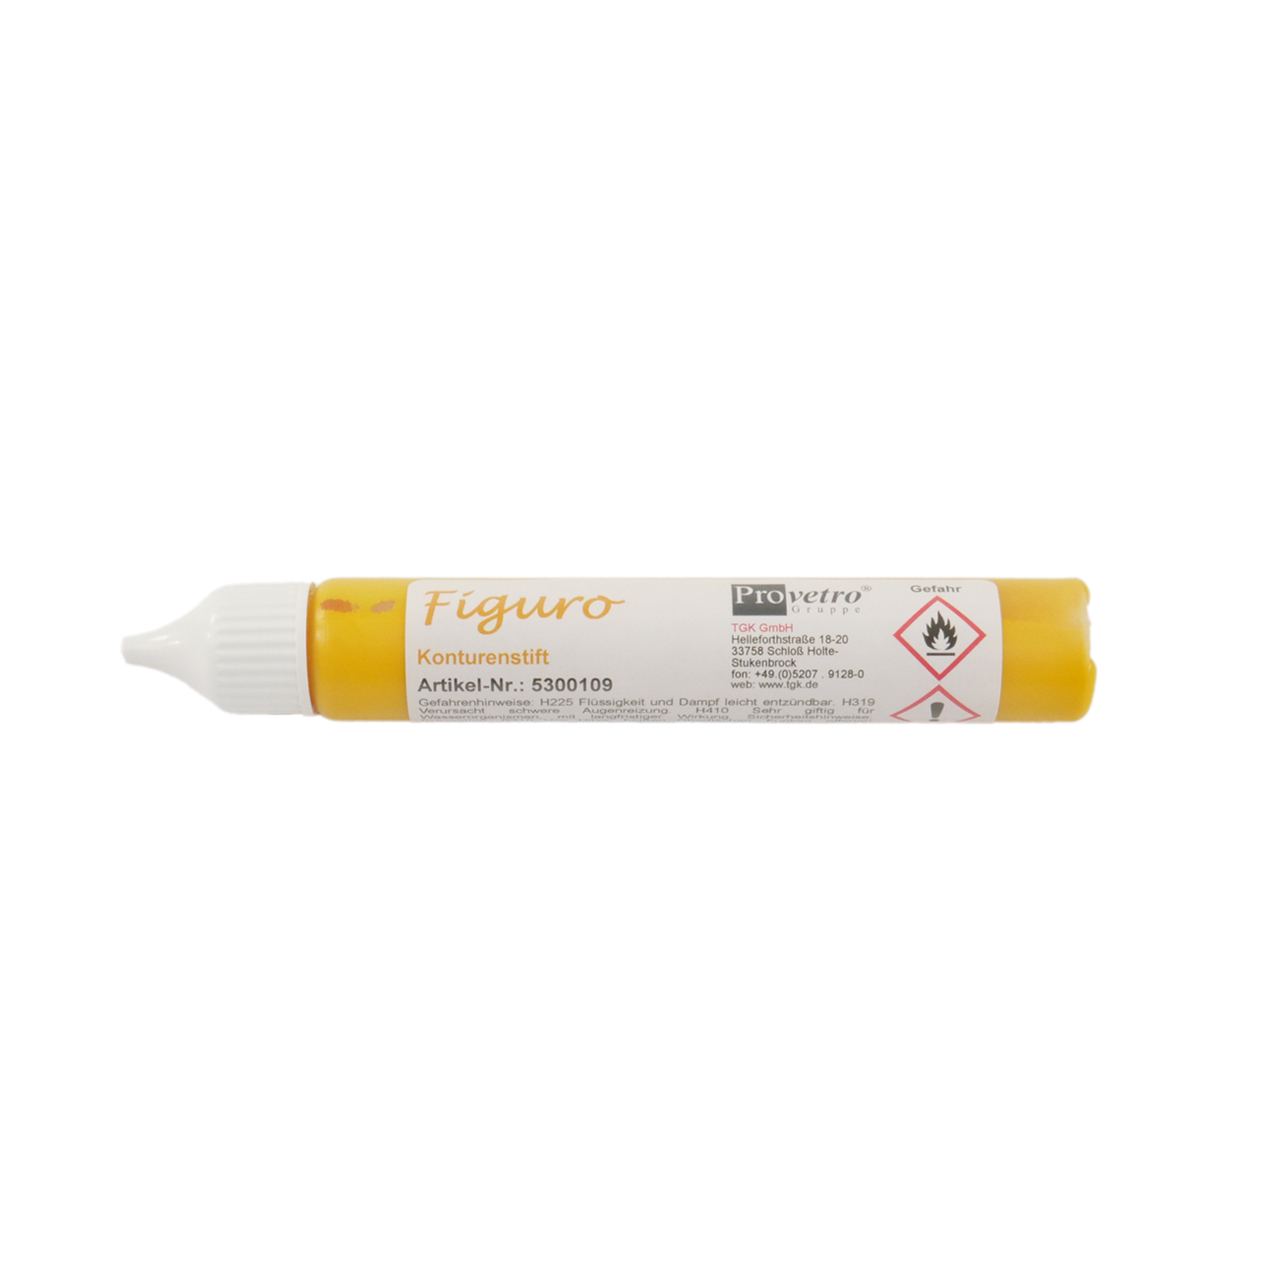 FIGURO contour line pen sunny yellow